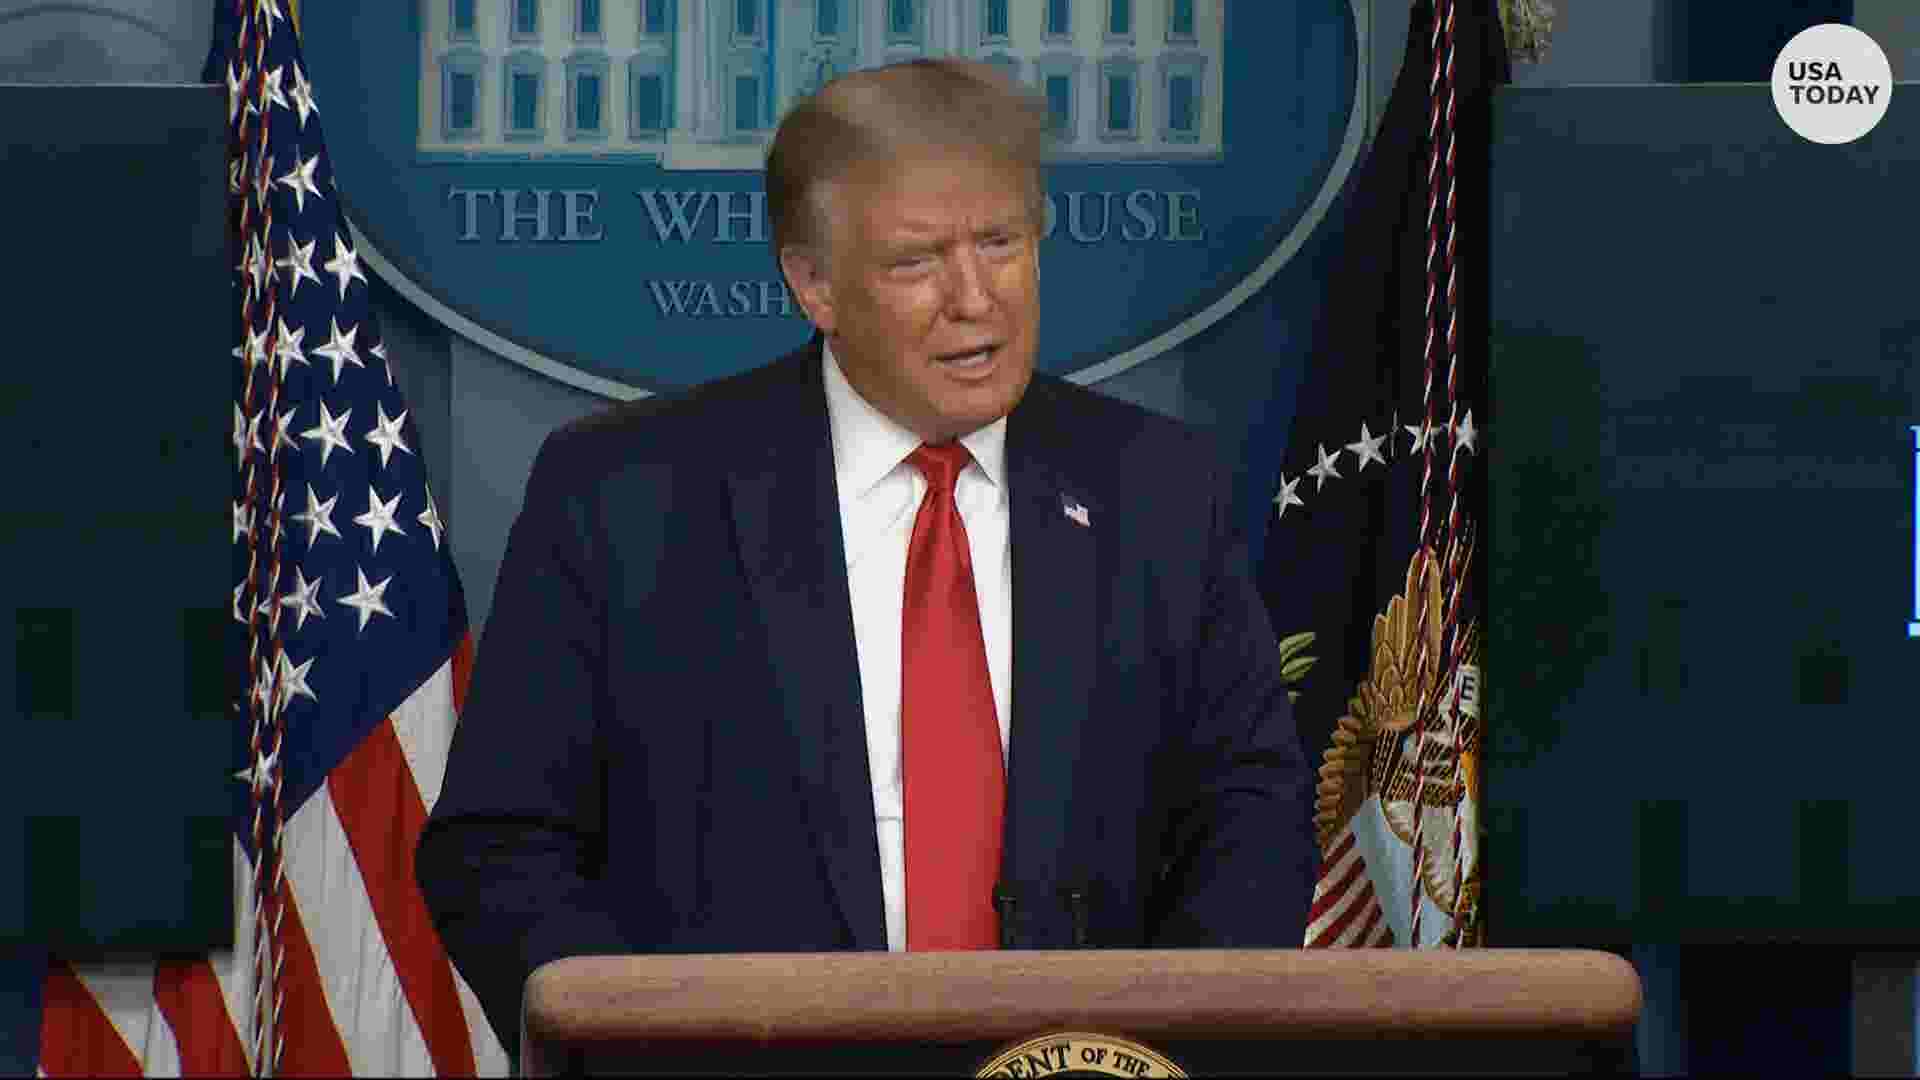 President Responds To Criminal Investigation Into Trump Organization